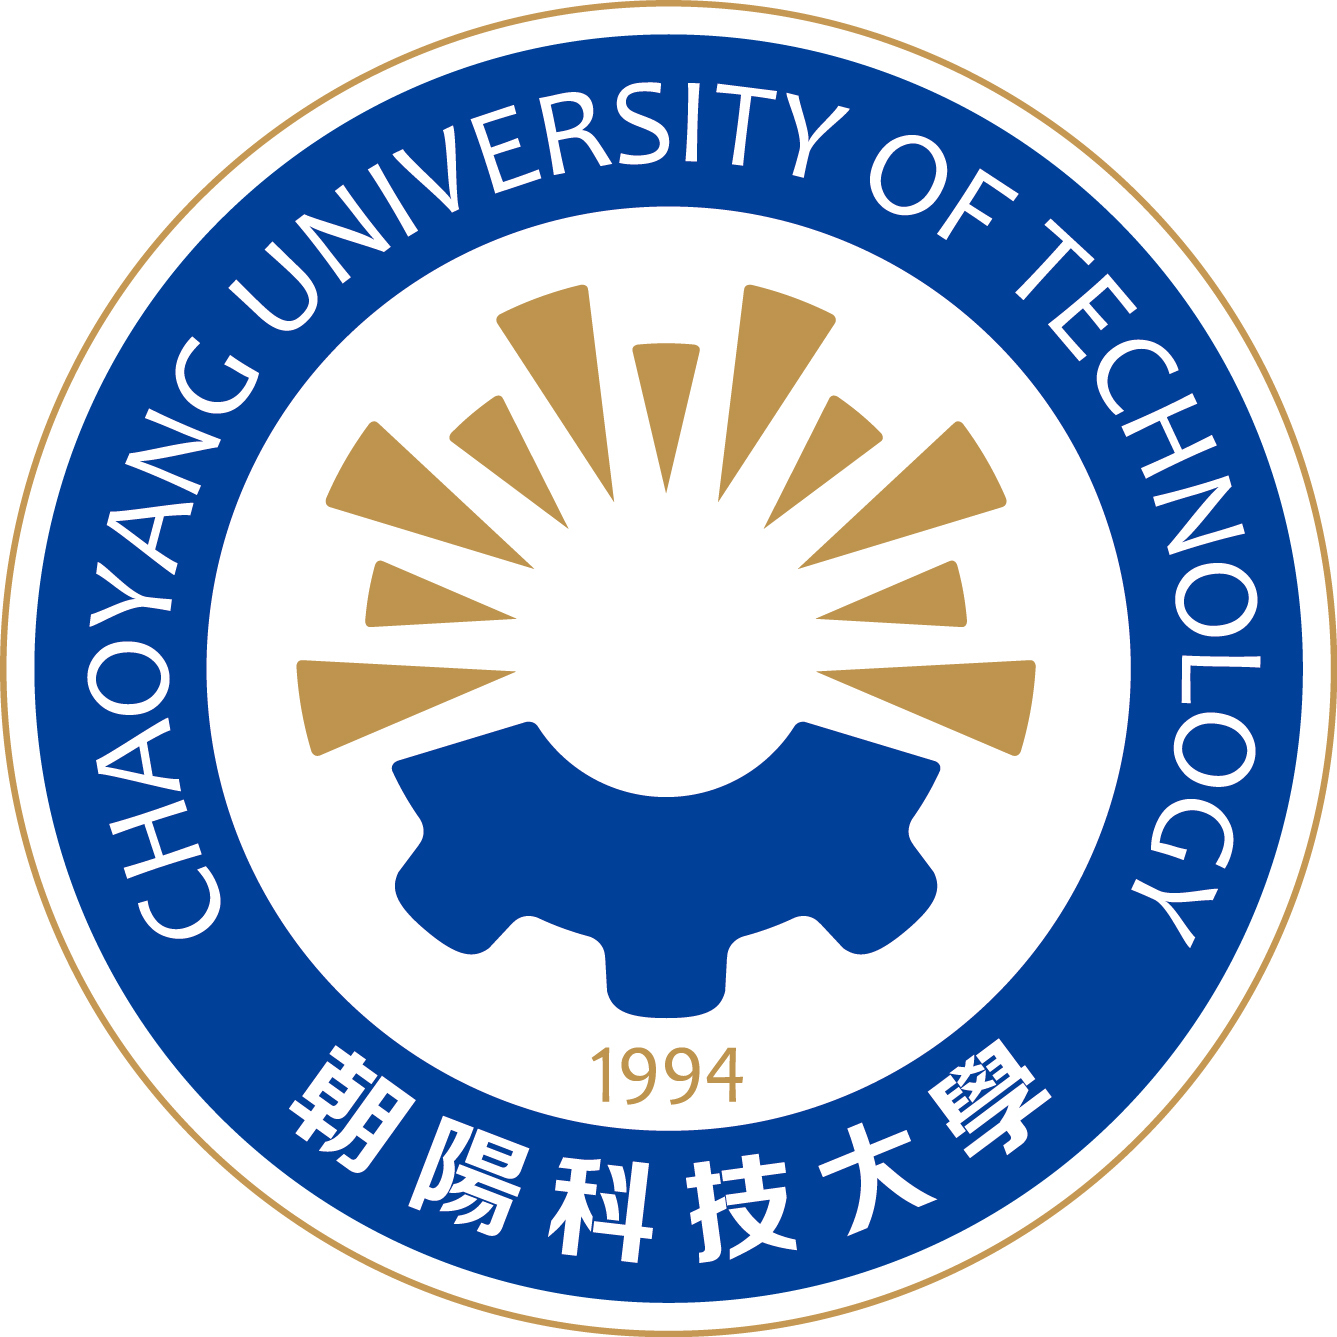 The University Motto and Emblem